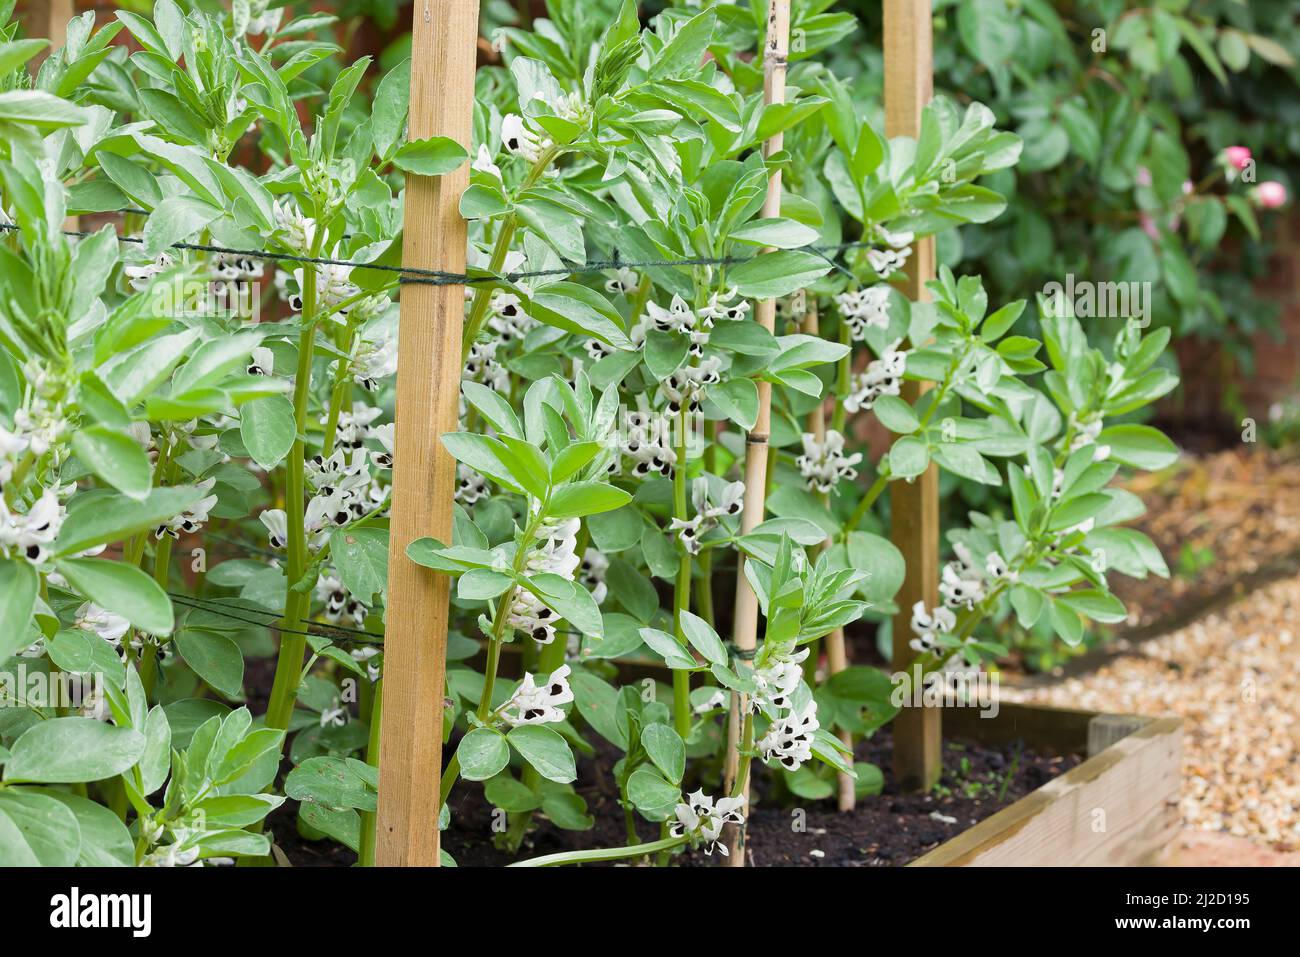 Vegetable garden UK with broad bean plants (fava beans), plants in flower Stock Photo